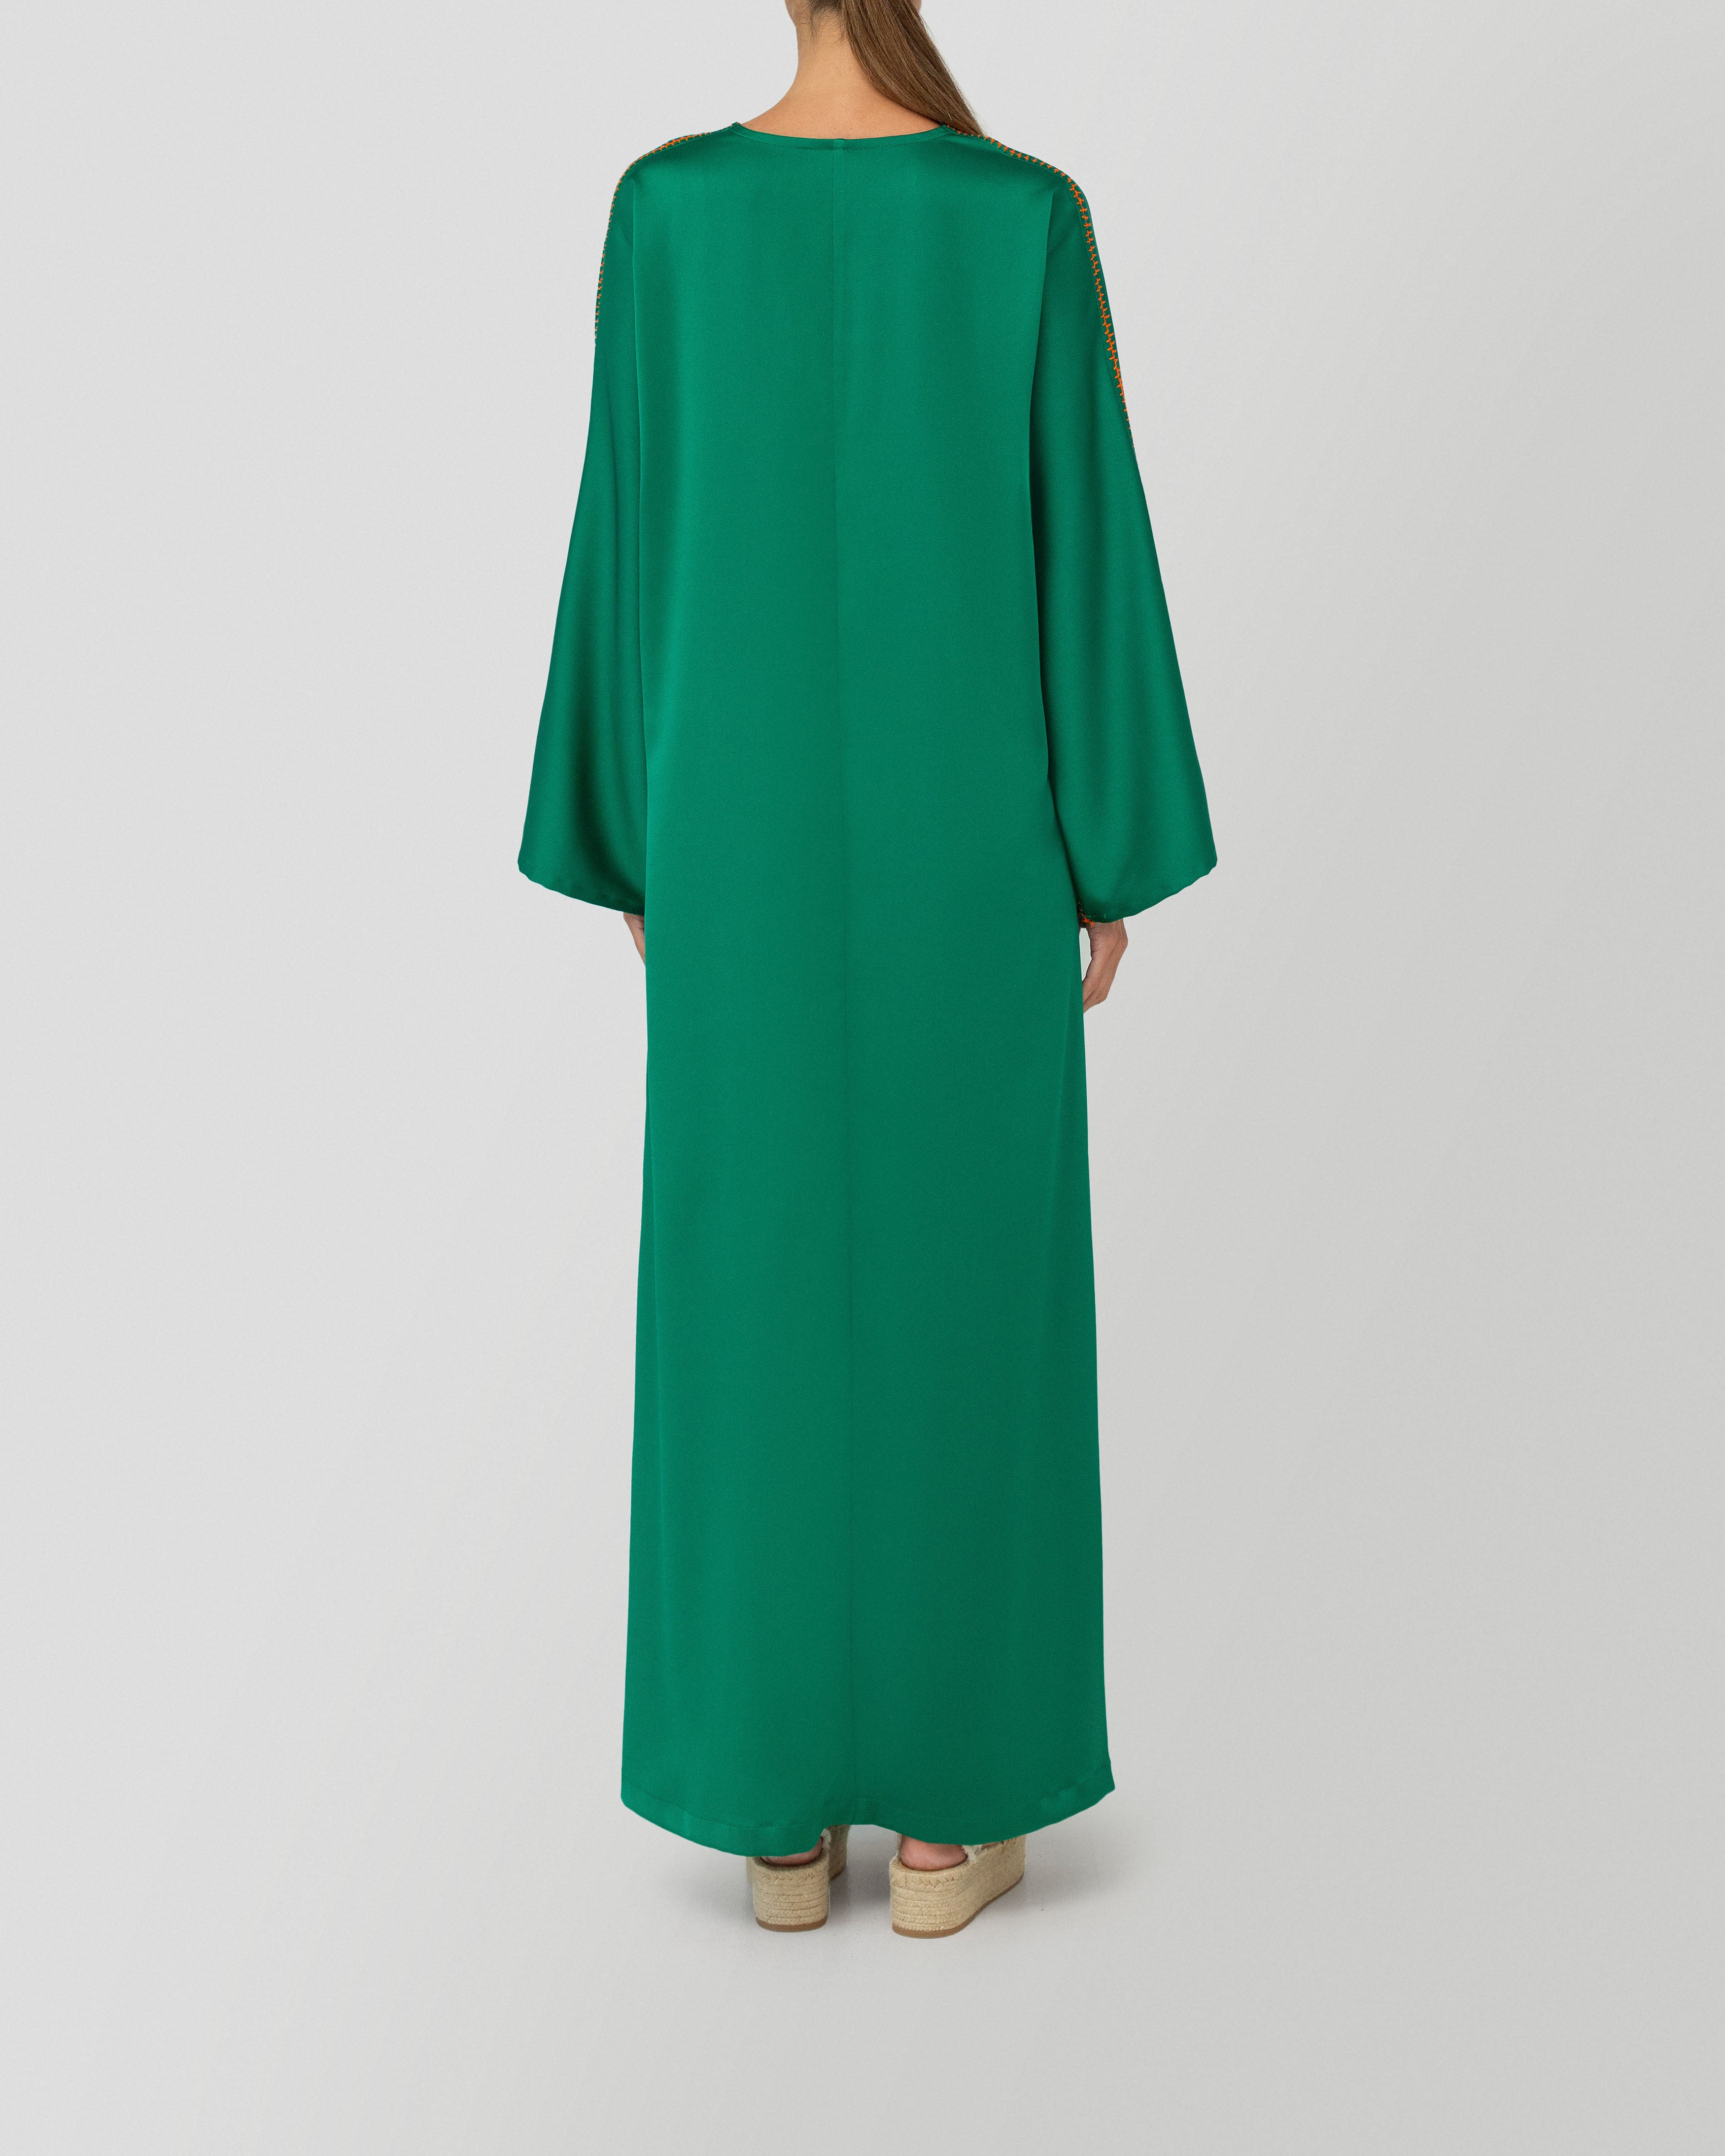 Aya Dress in Emerald